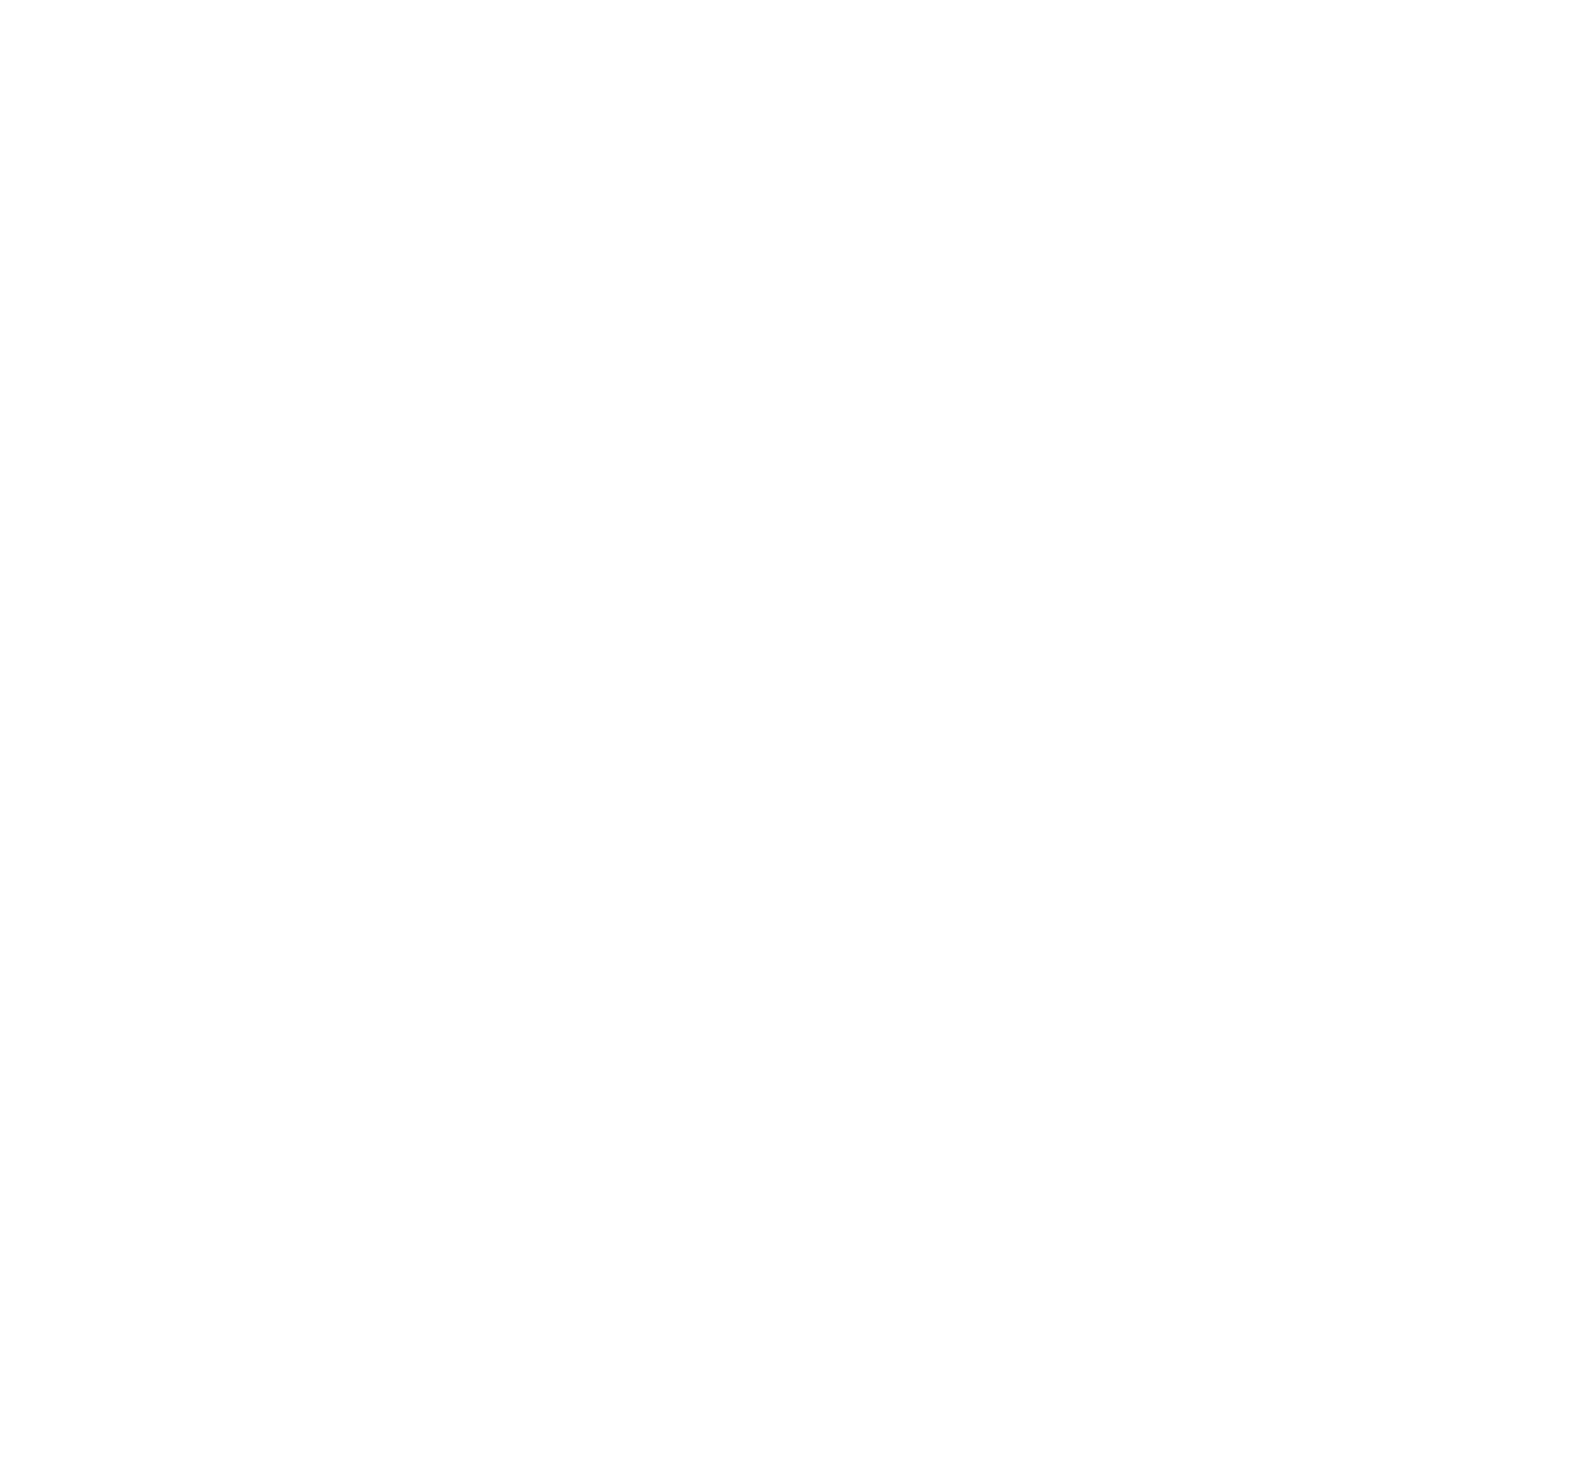 Qatar Aluminium Manufacturing Company logo grand pour les fonds sombres (PNG transparent)